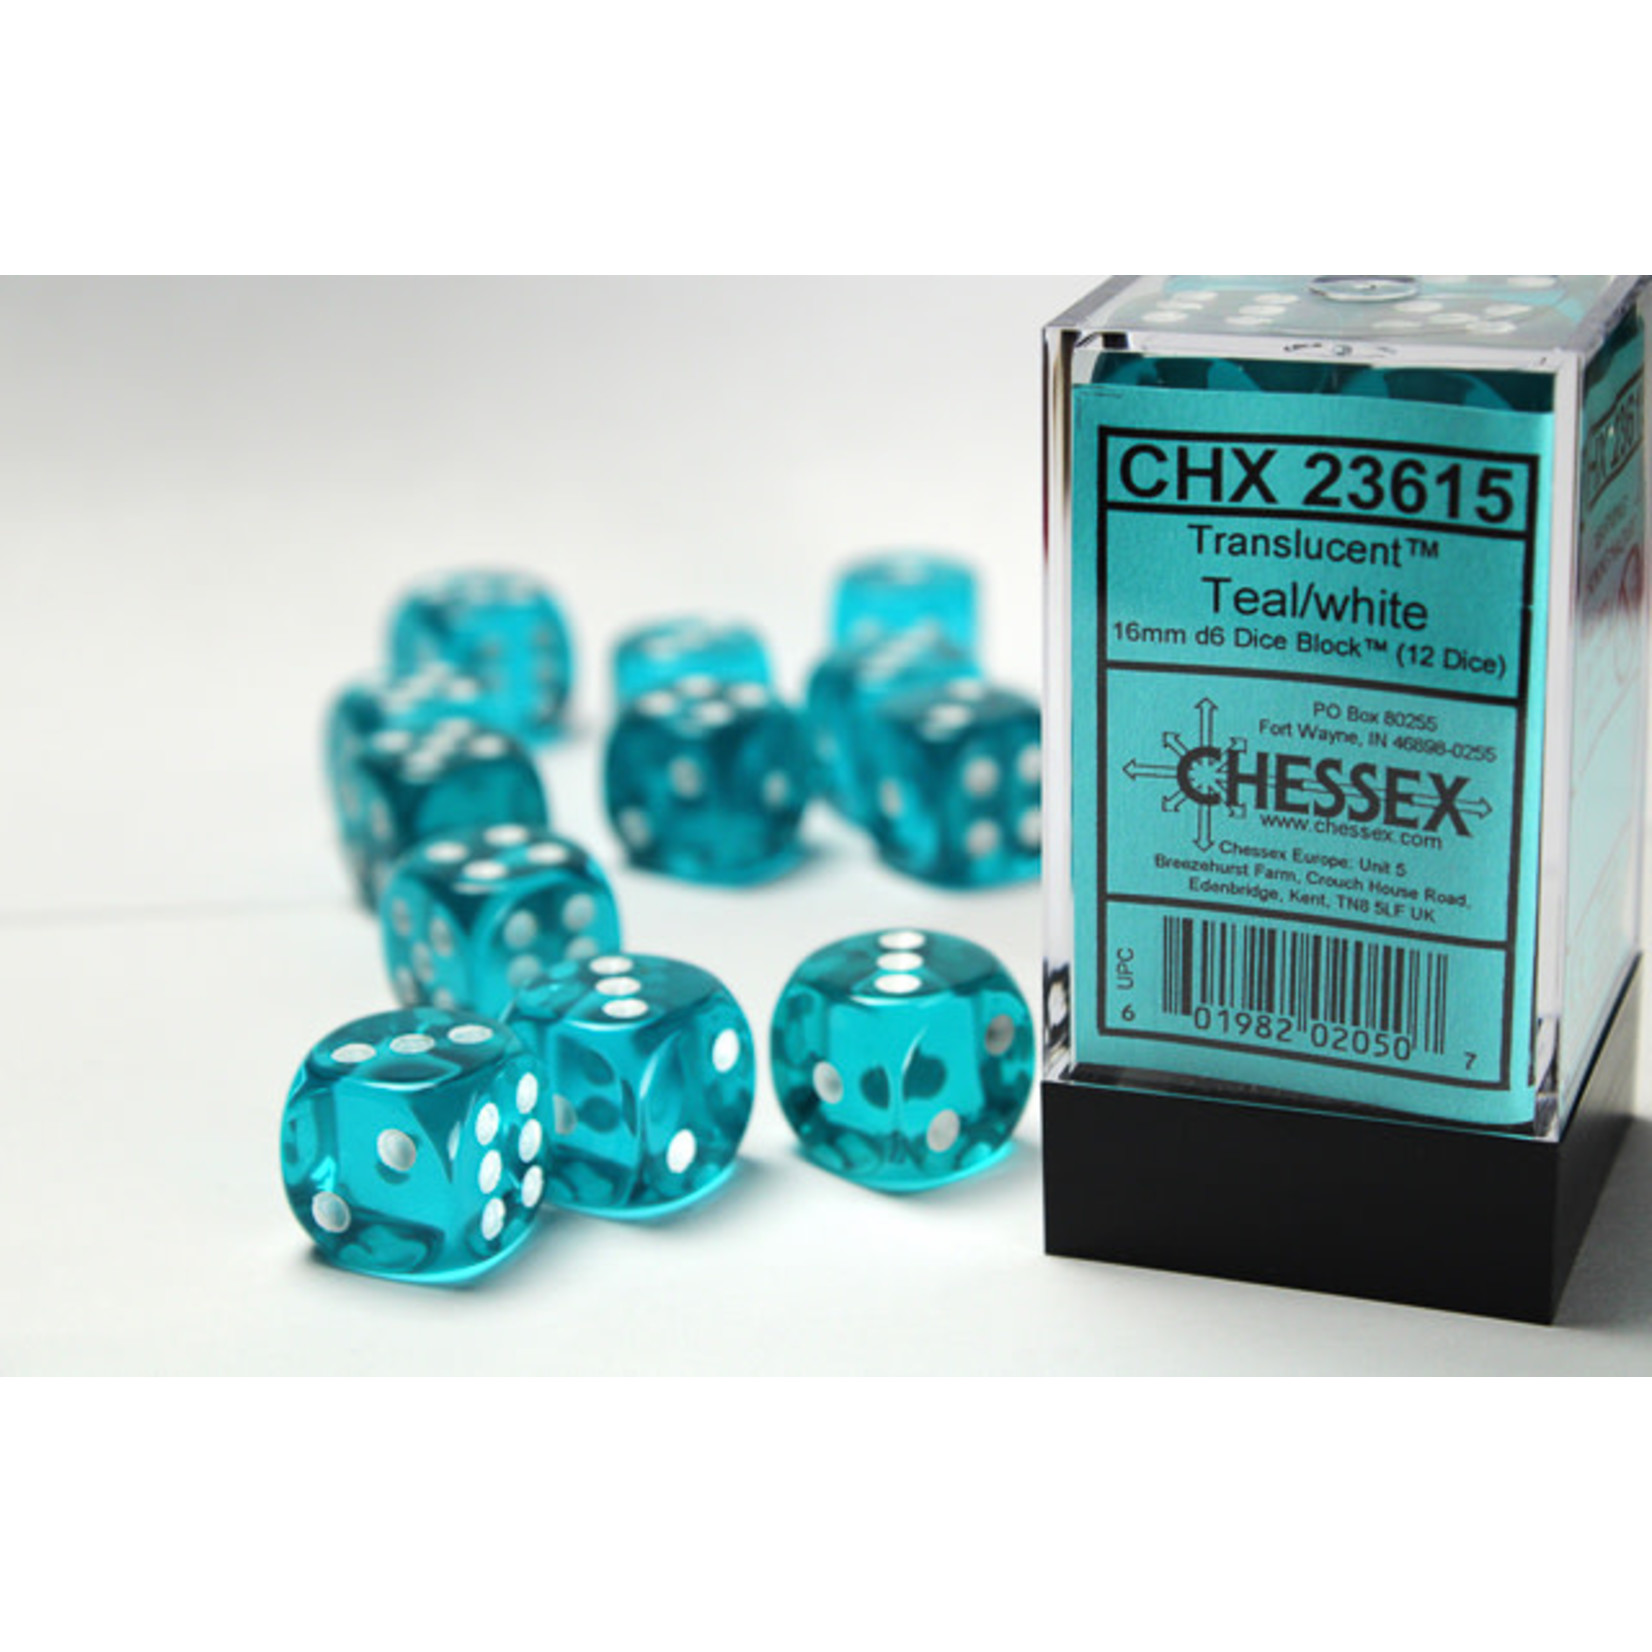 Chessex 23615 Translucent 12pc Teal/White Dice